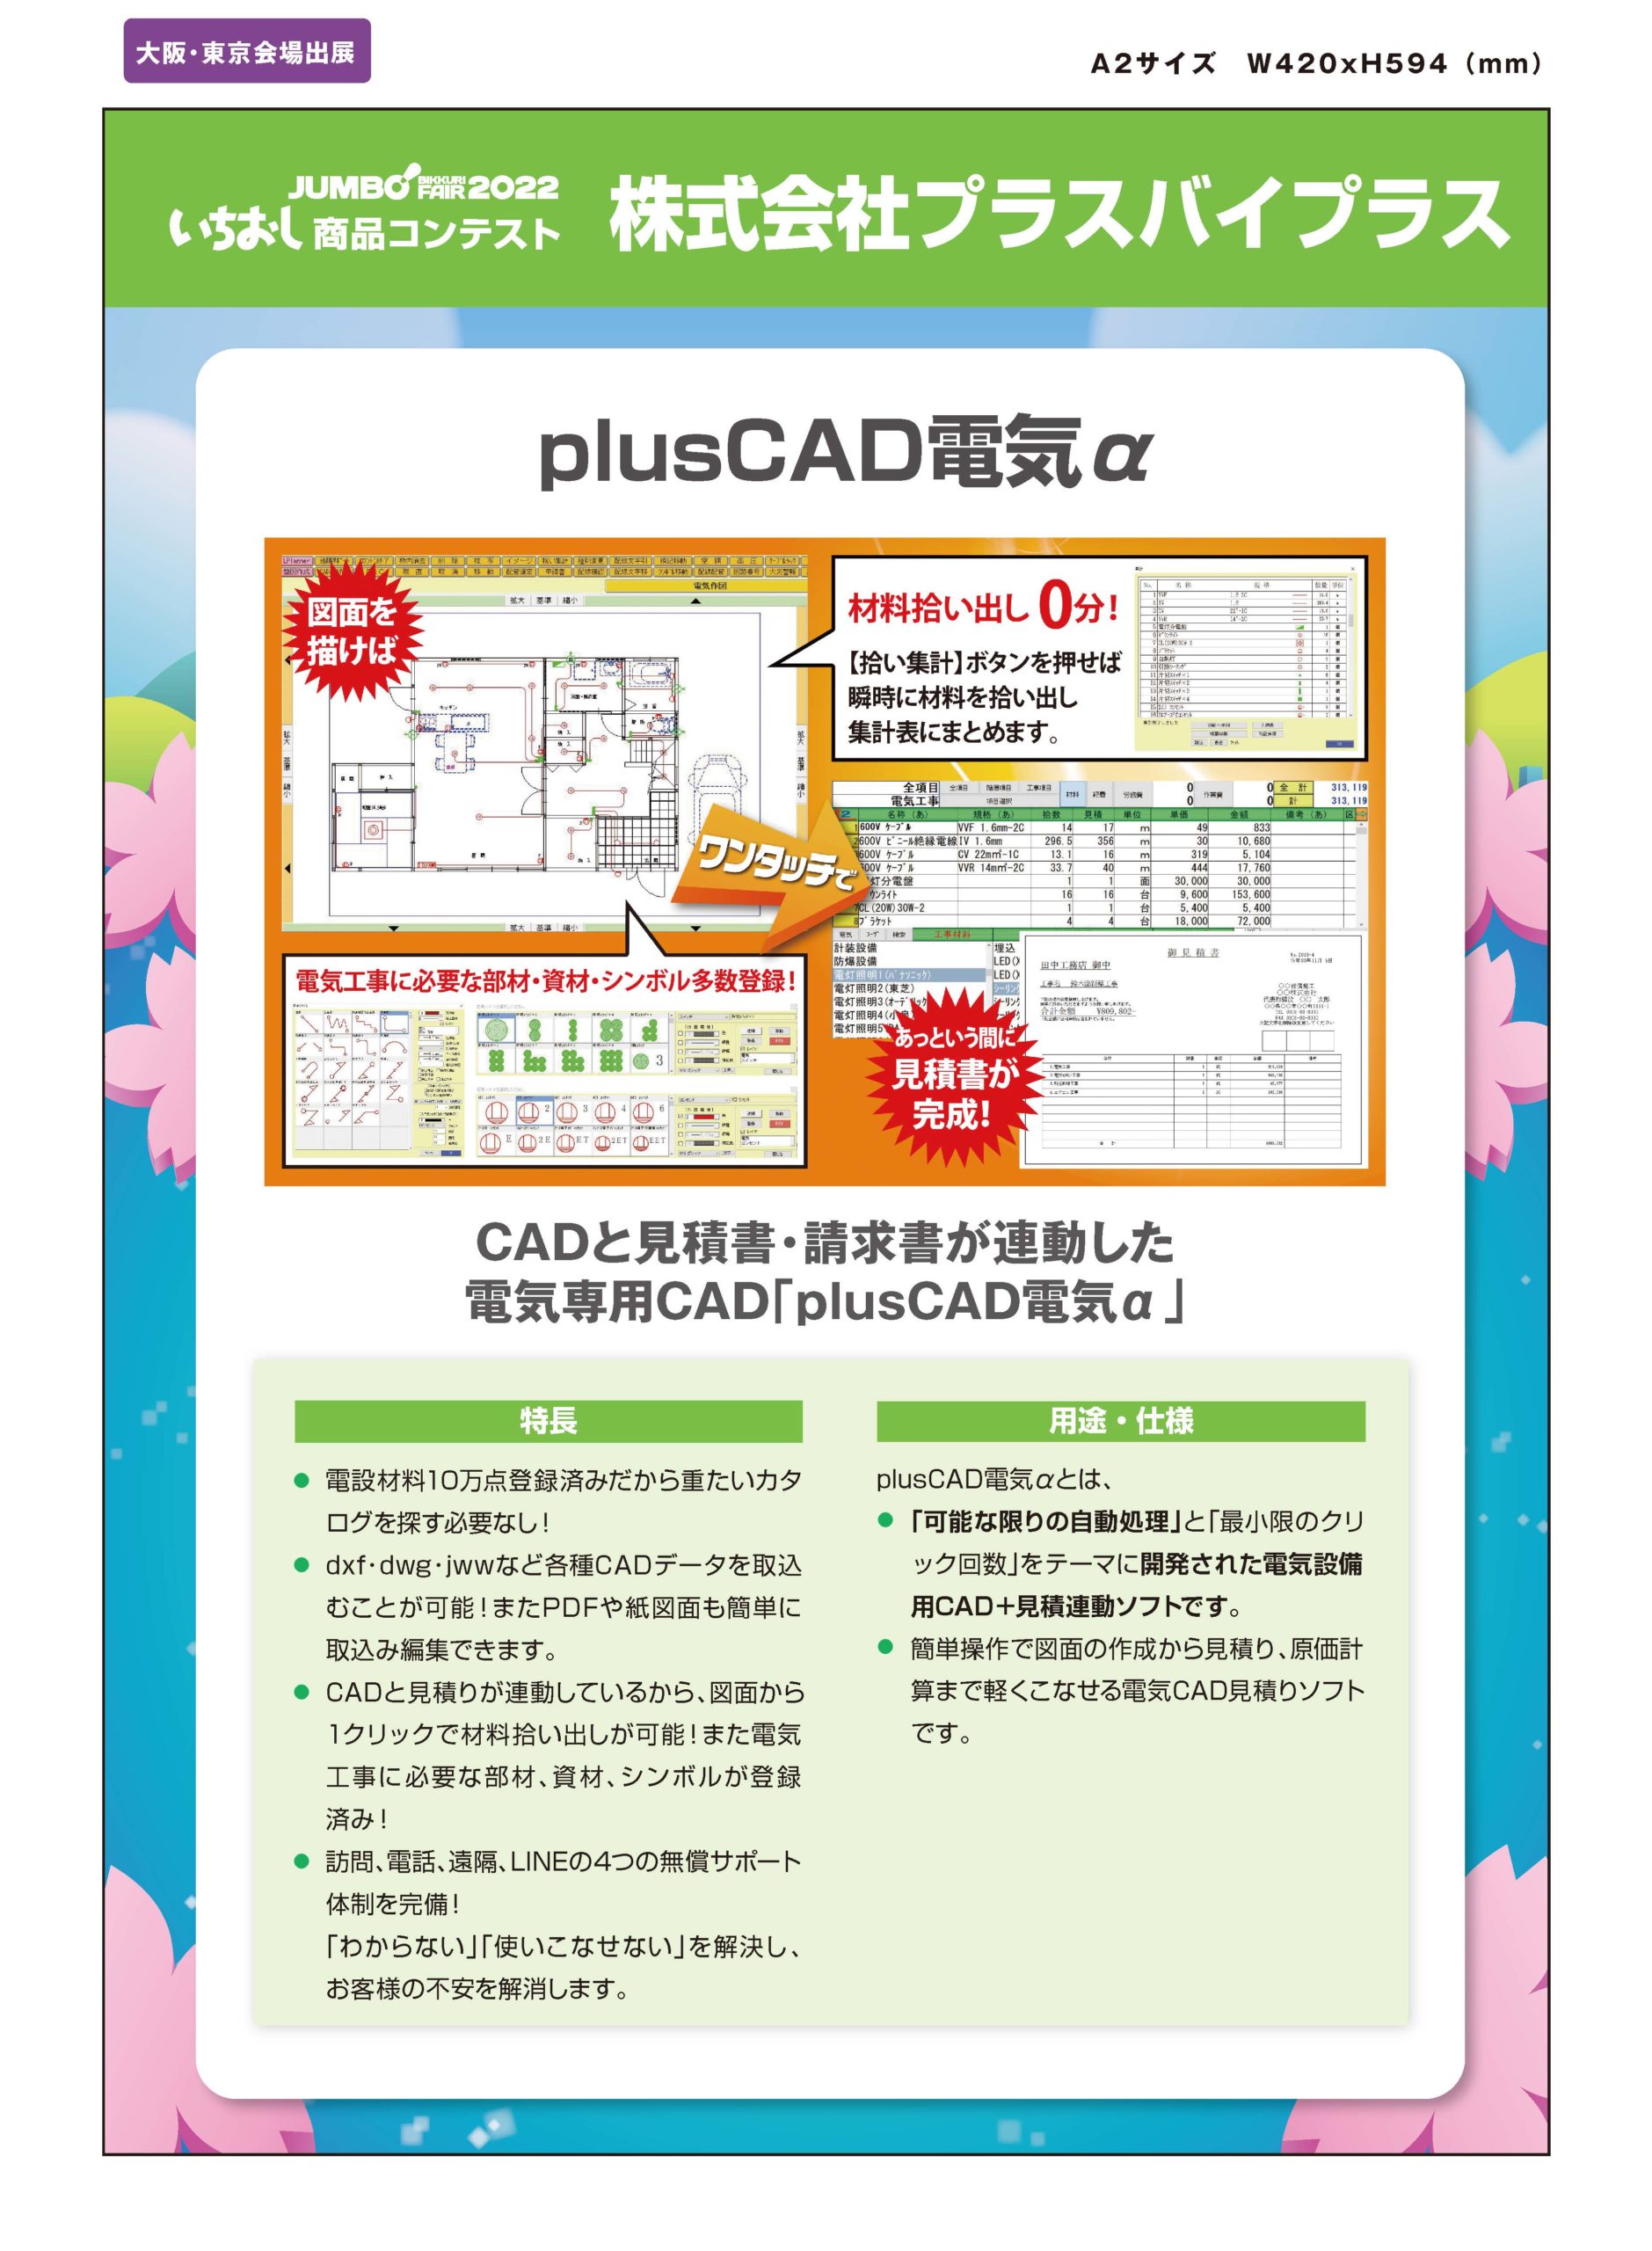 「plusCAD電気α」株式会社プラスバイプラスの画像